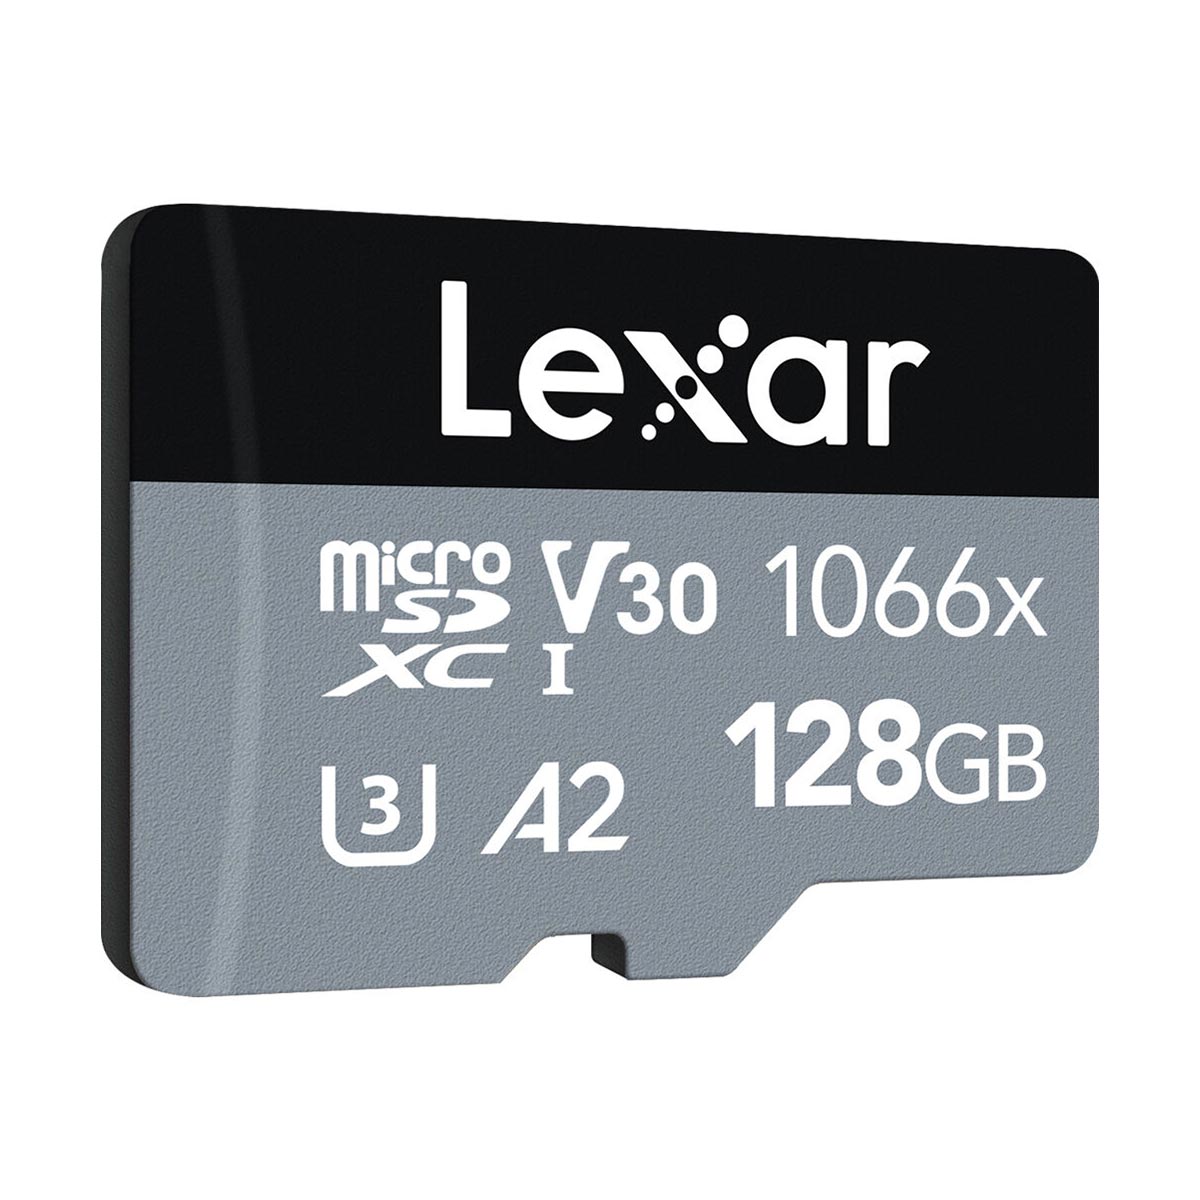 Lexar 128GB Professional 1066x UHS-I microSDXC (V30) Memory Card with SD Adapter